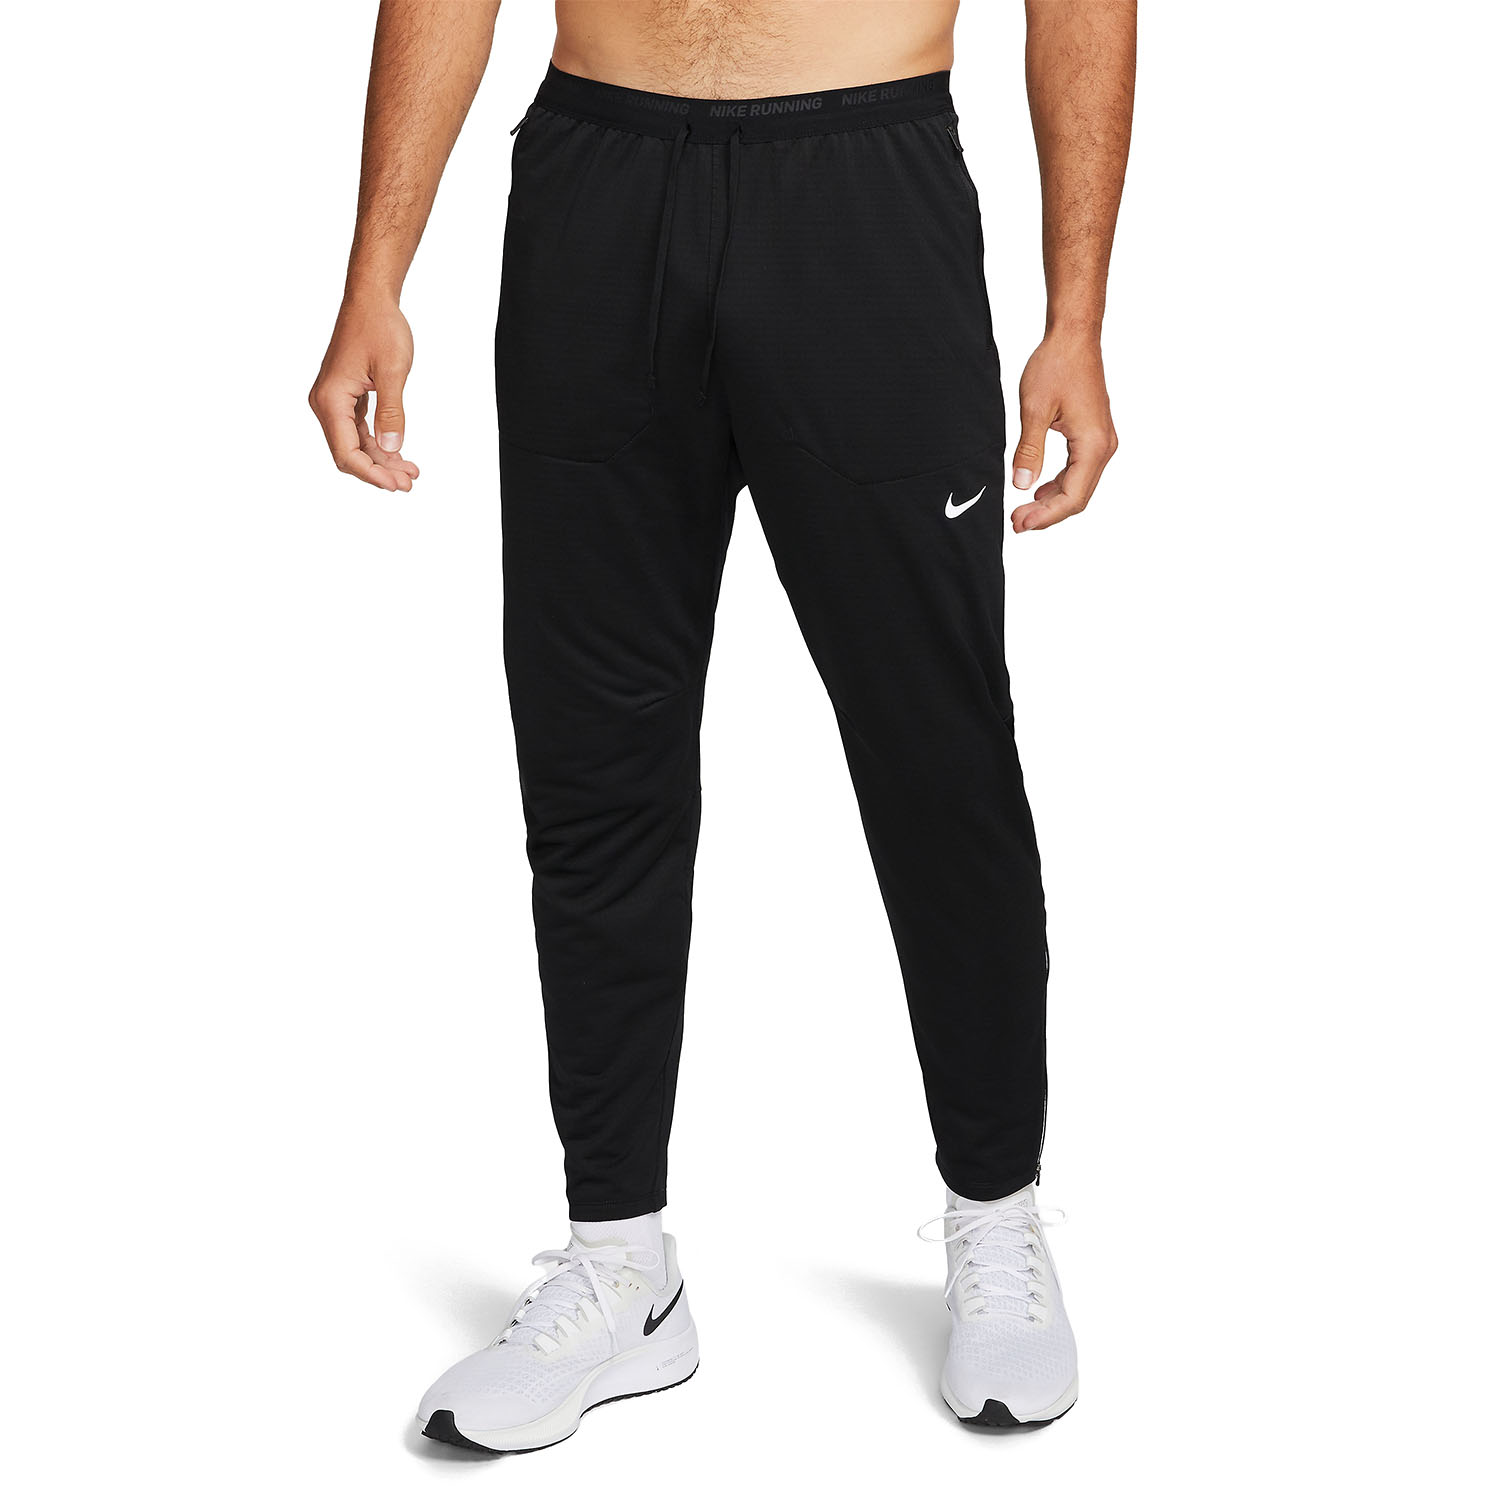 Nike Phenom Elite Pantalones - Black/Reflective Silver